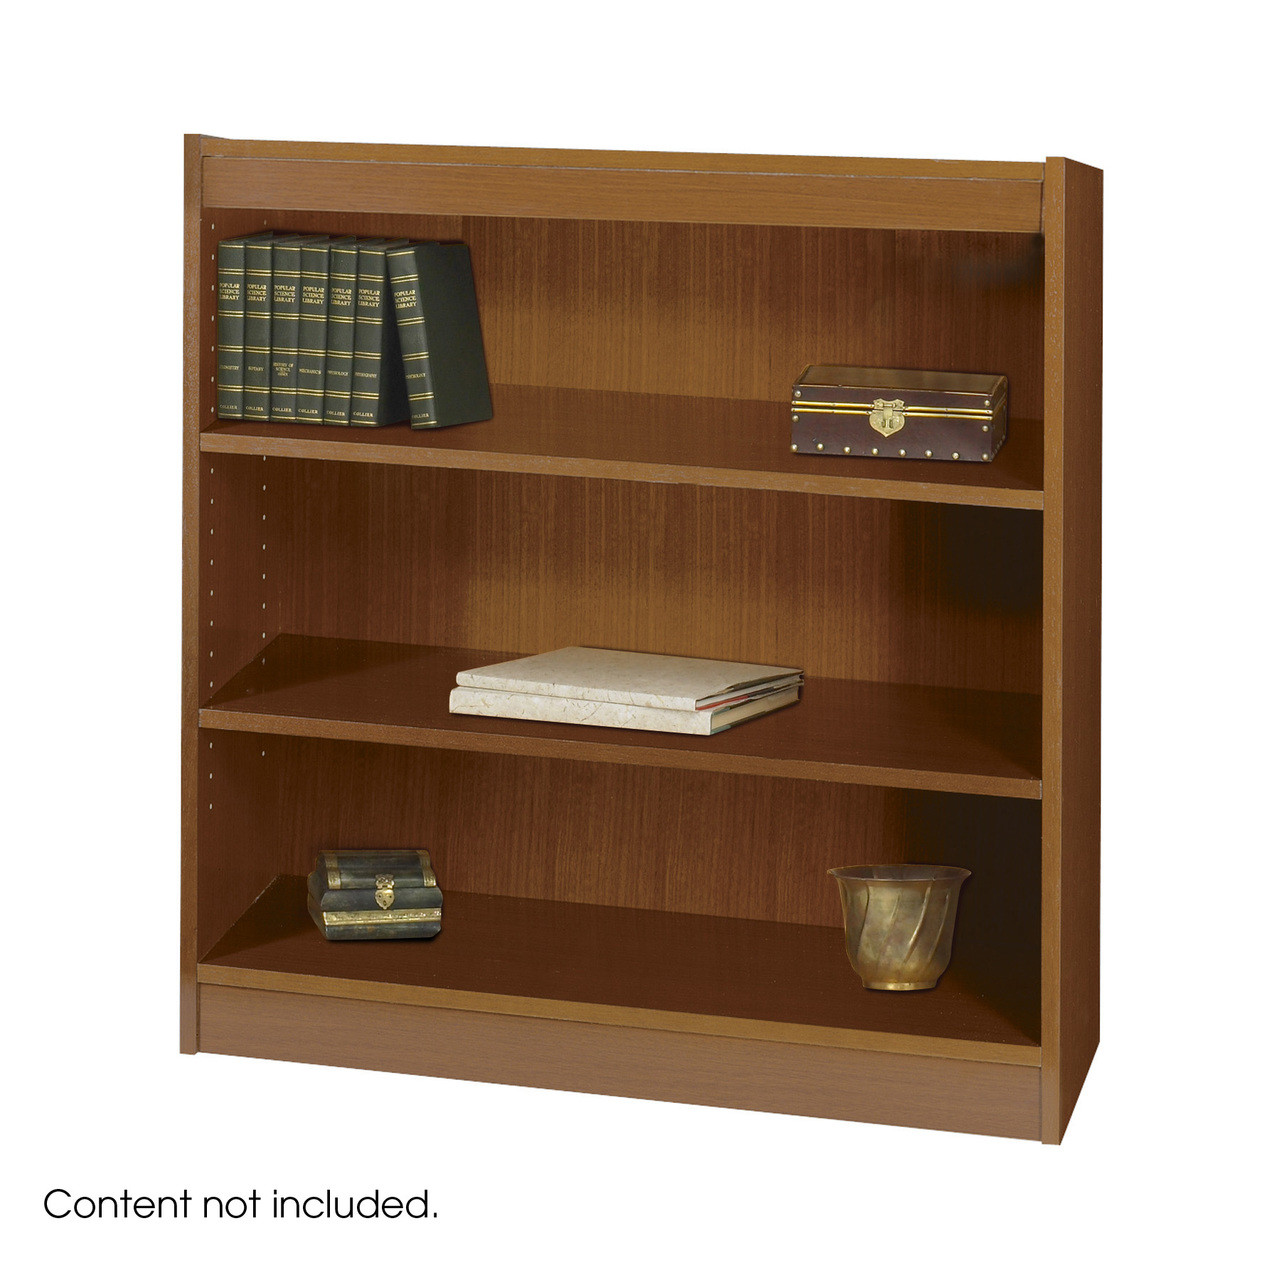 Square-Edge Veneer Bookcase - 3 Shelf